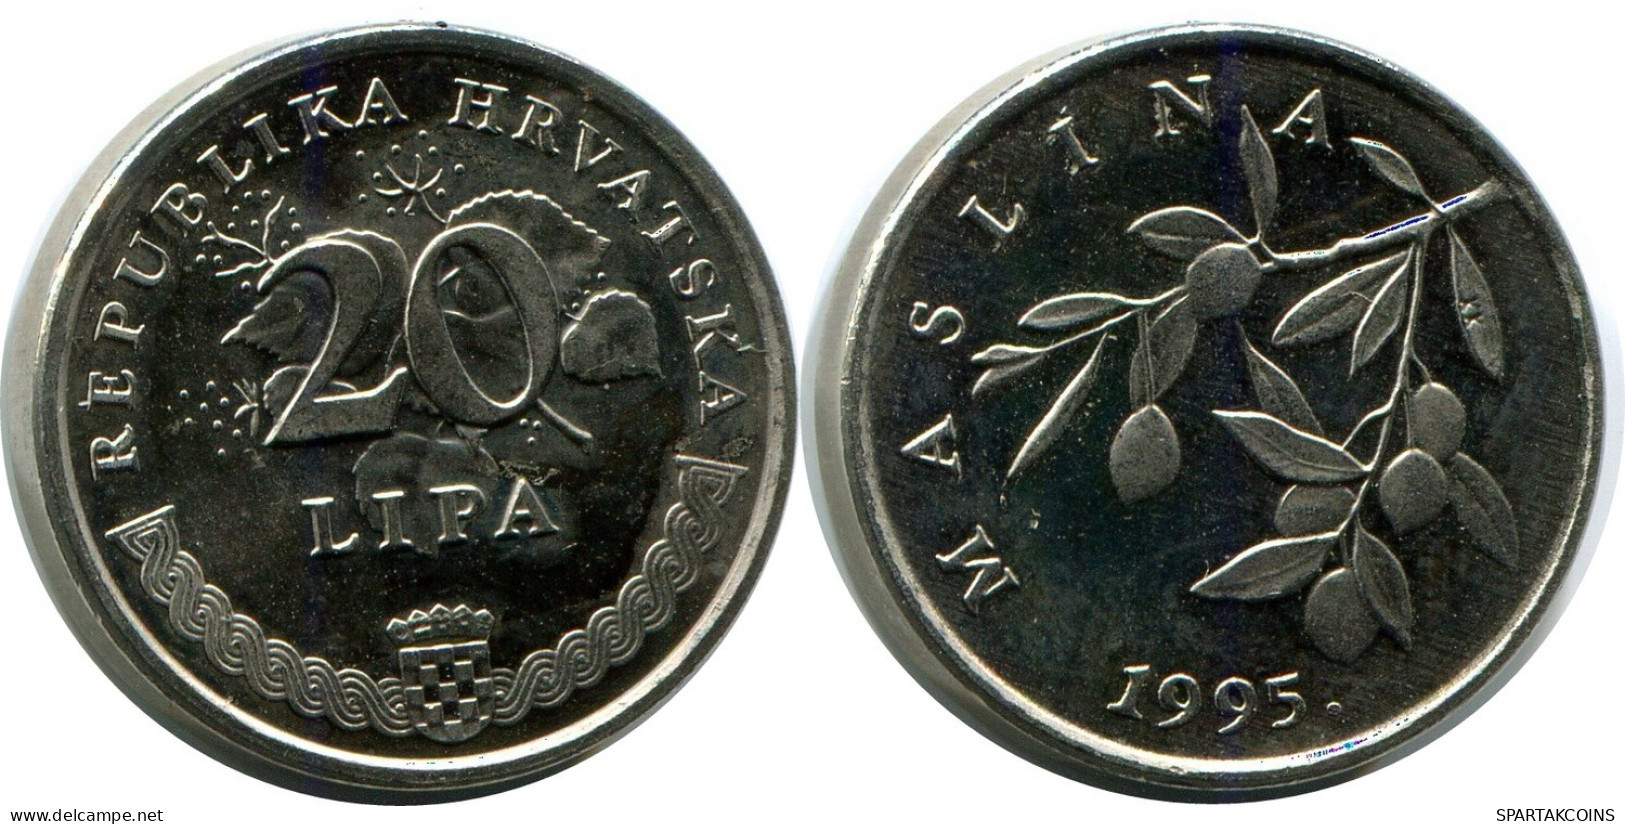 20 LIPA 1995 CROATIA Coin #AR930.U.A - Croazia